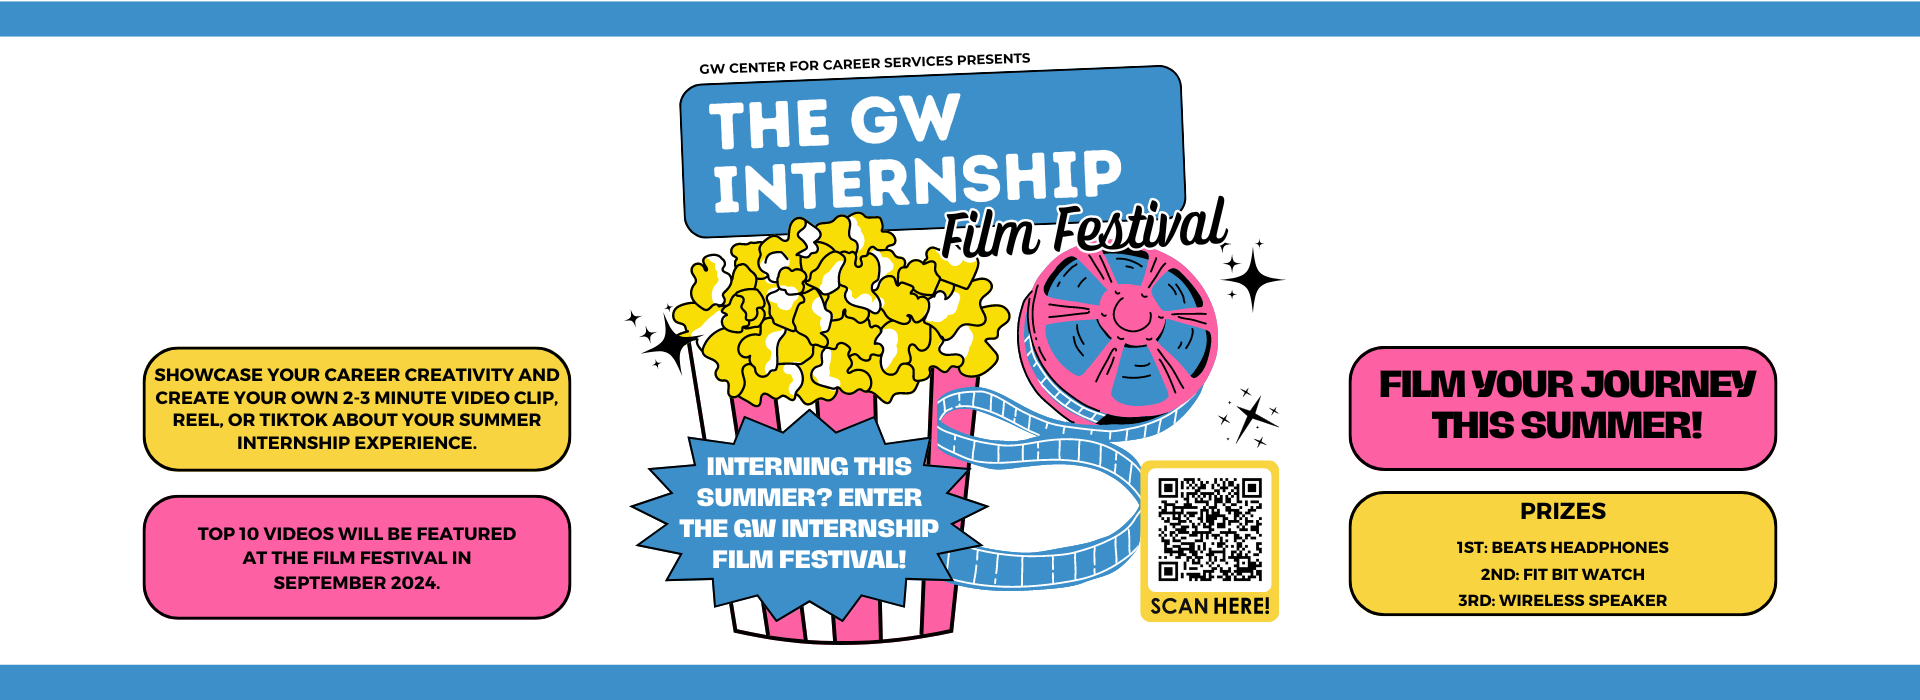 Internship Film Festival Promotional Image